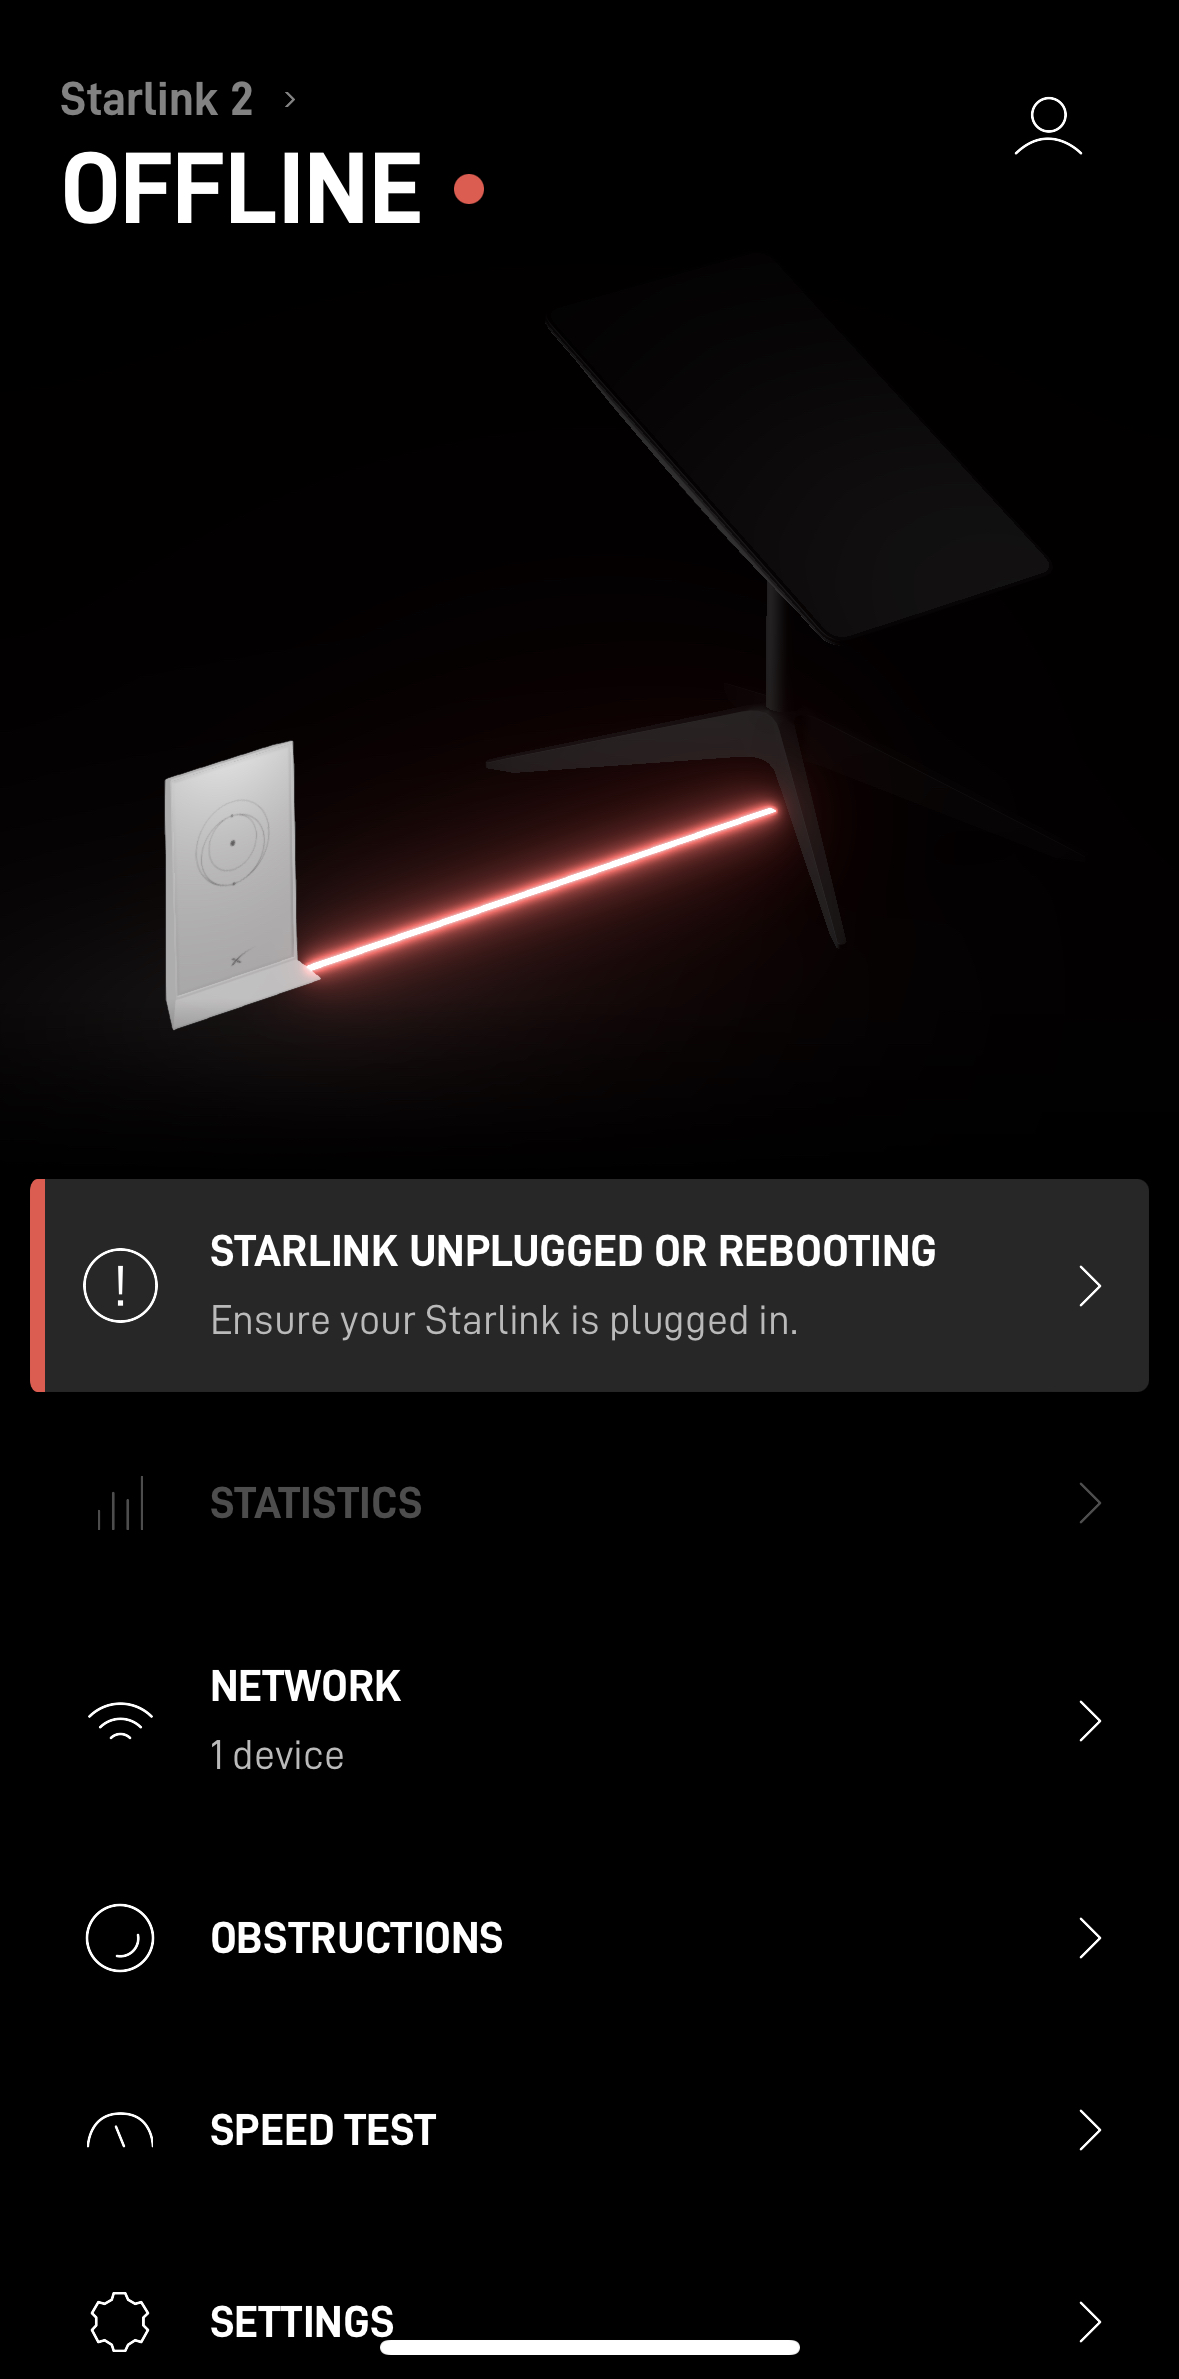 Why is my Starlink signal so weak?